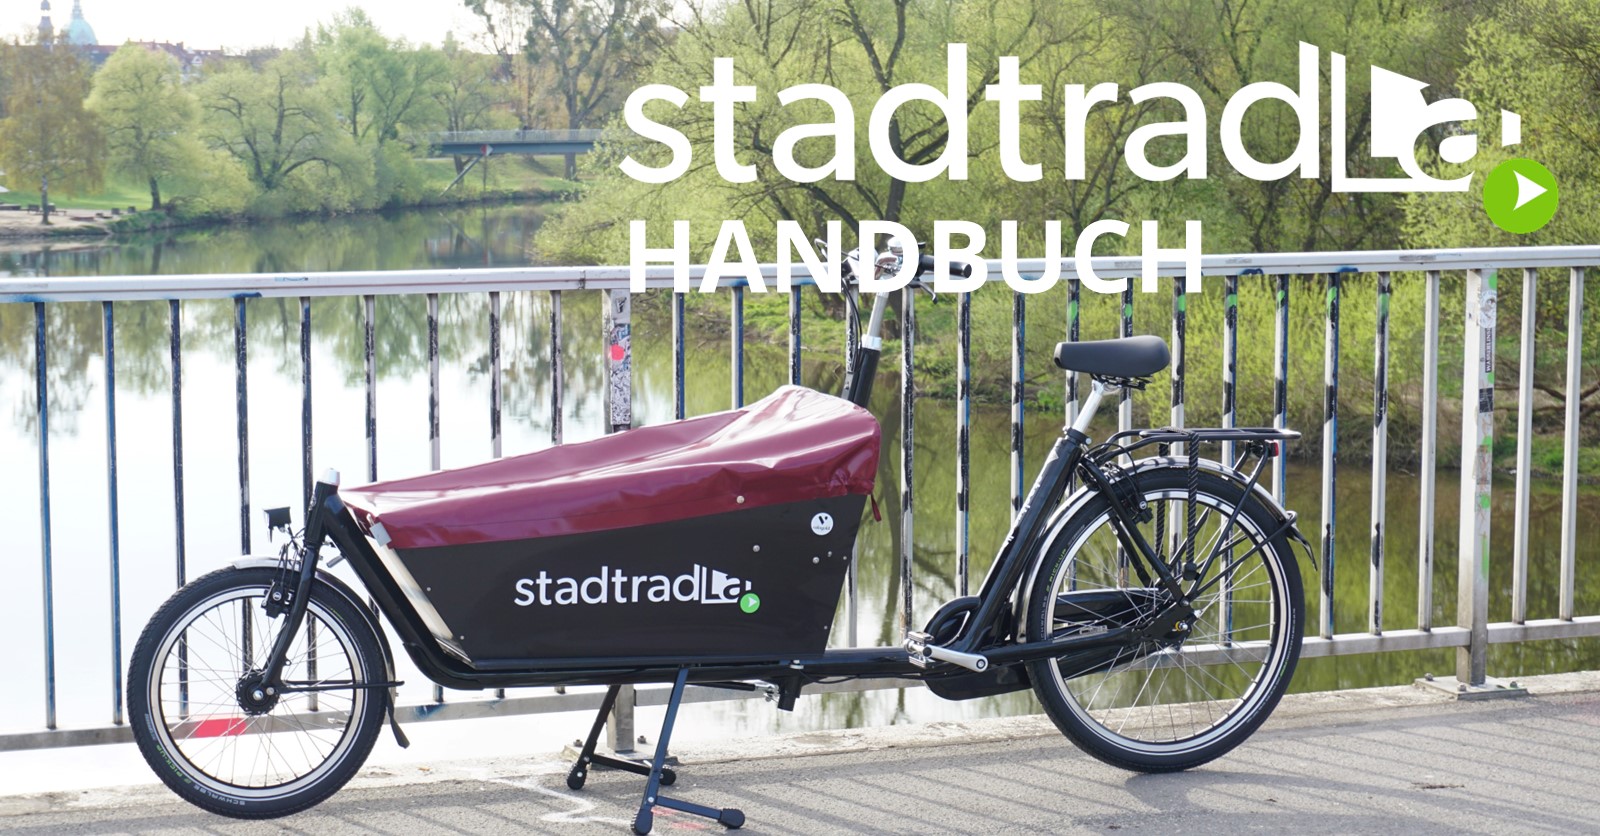 Handbuch | stadtradla